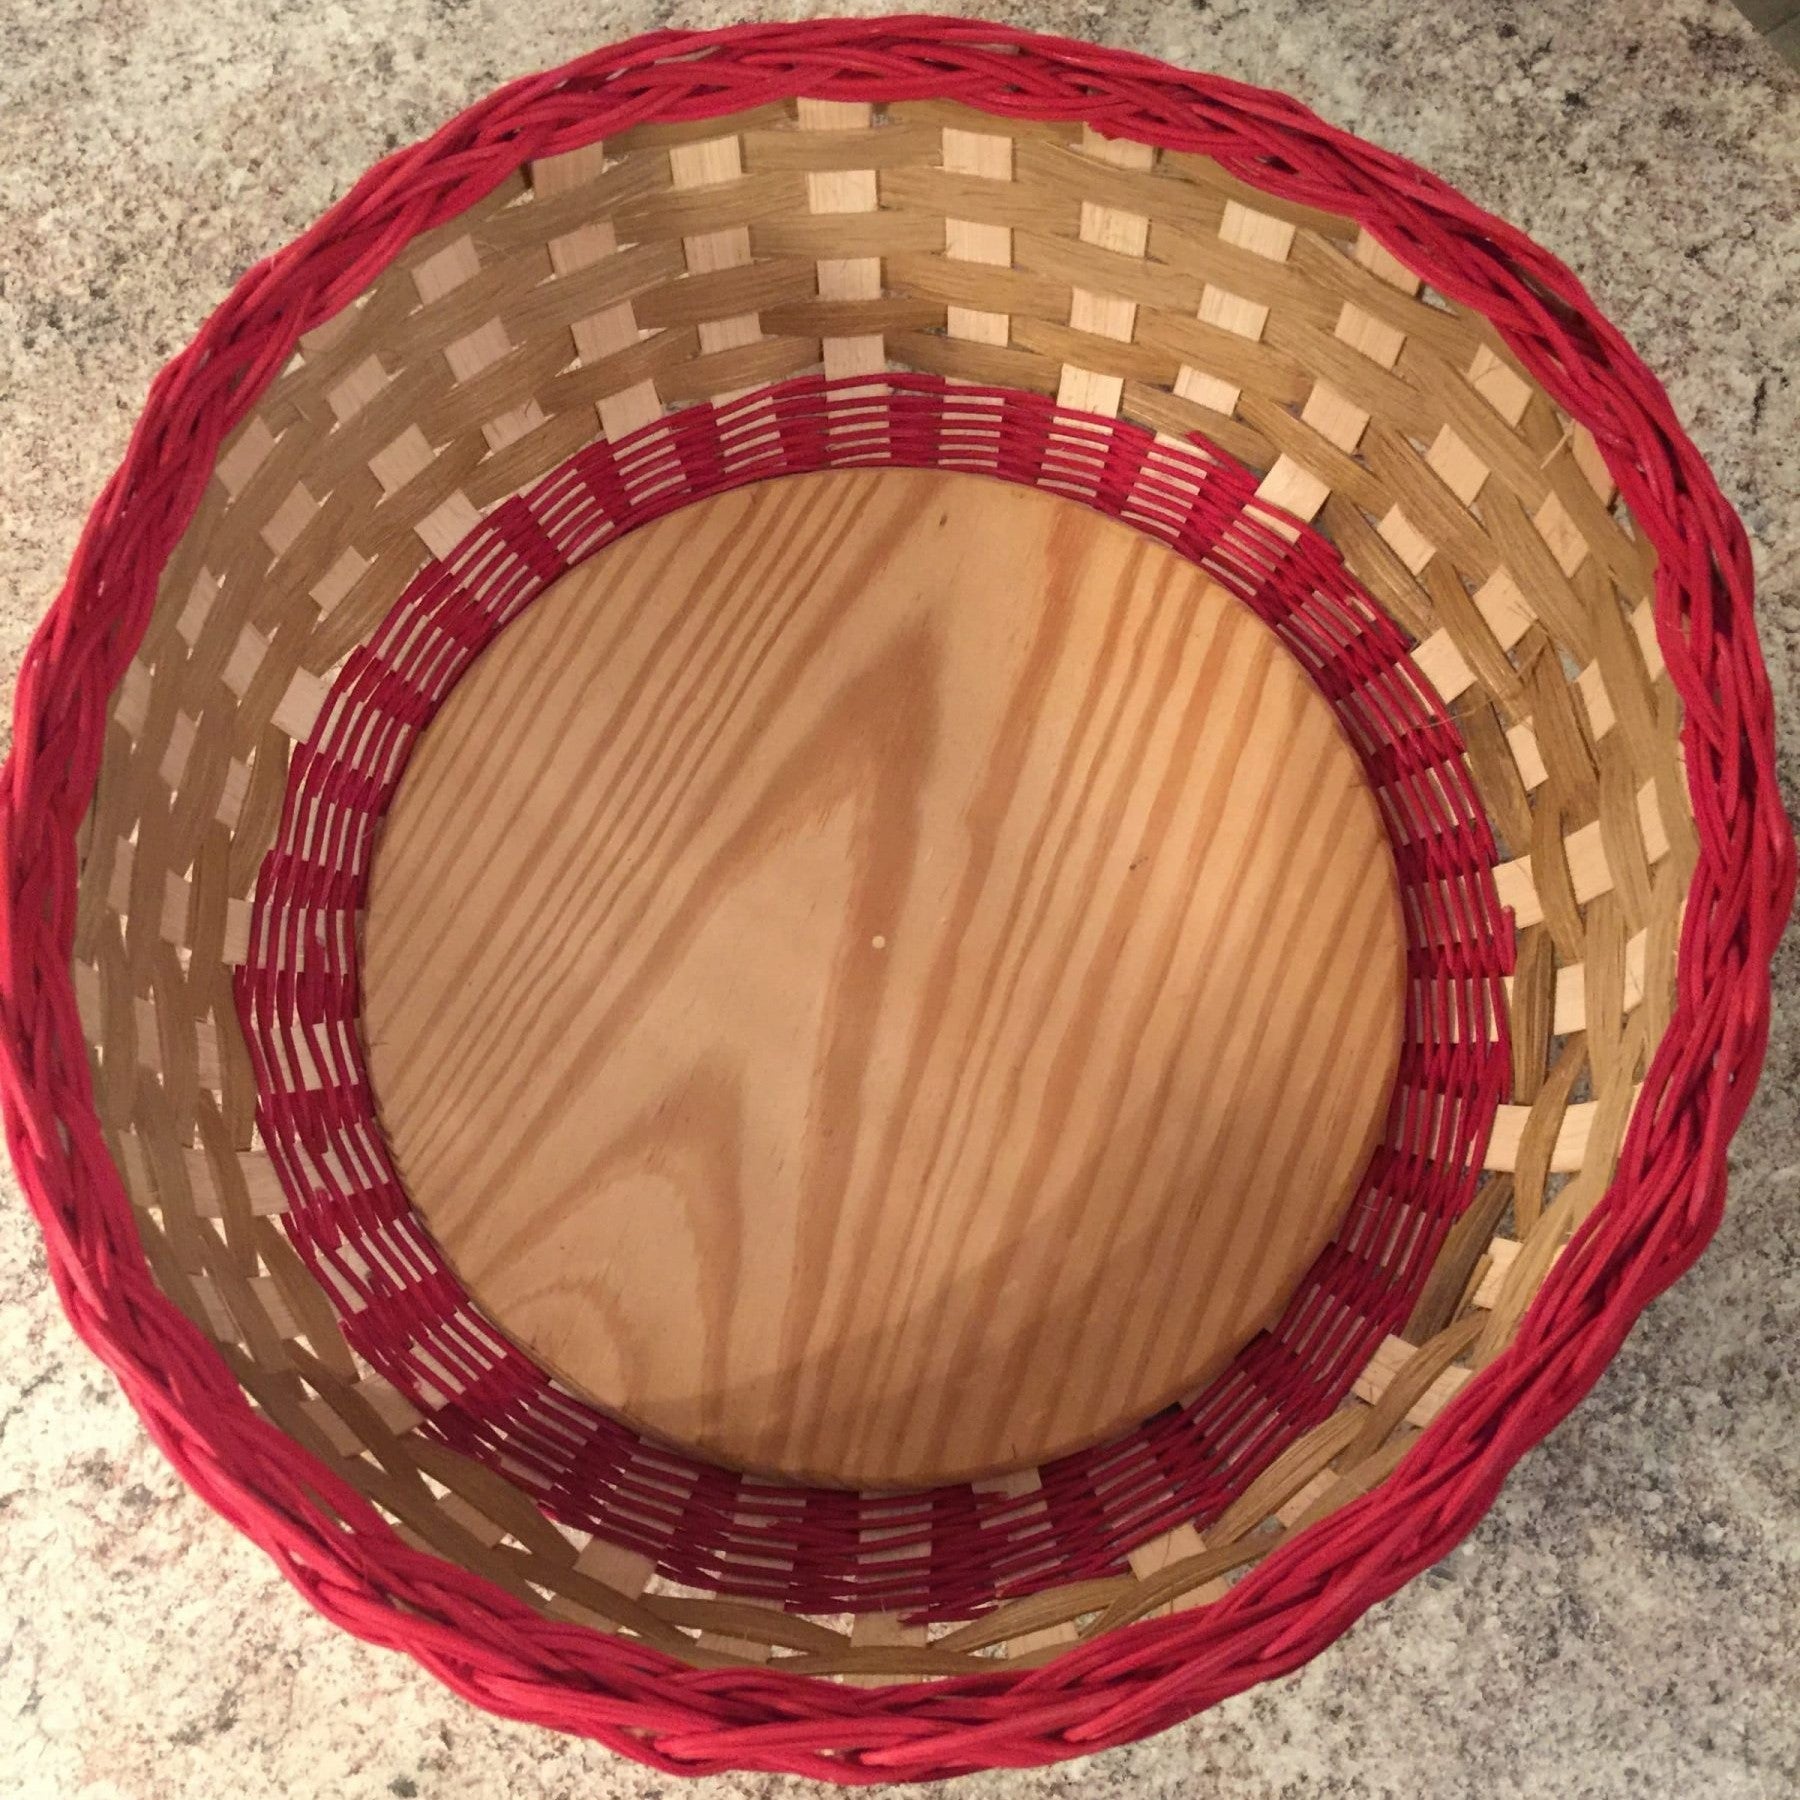 The Dinner Table Basket